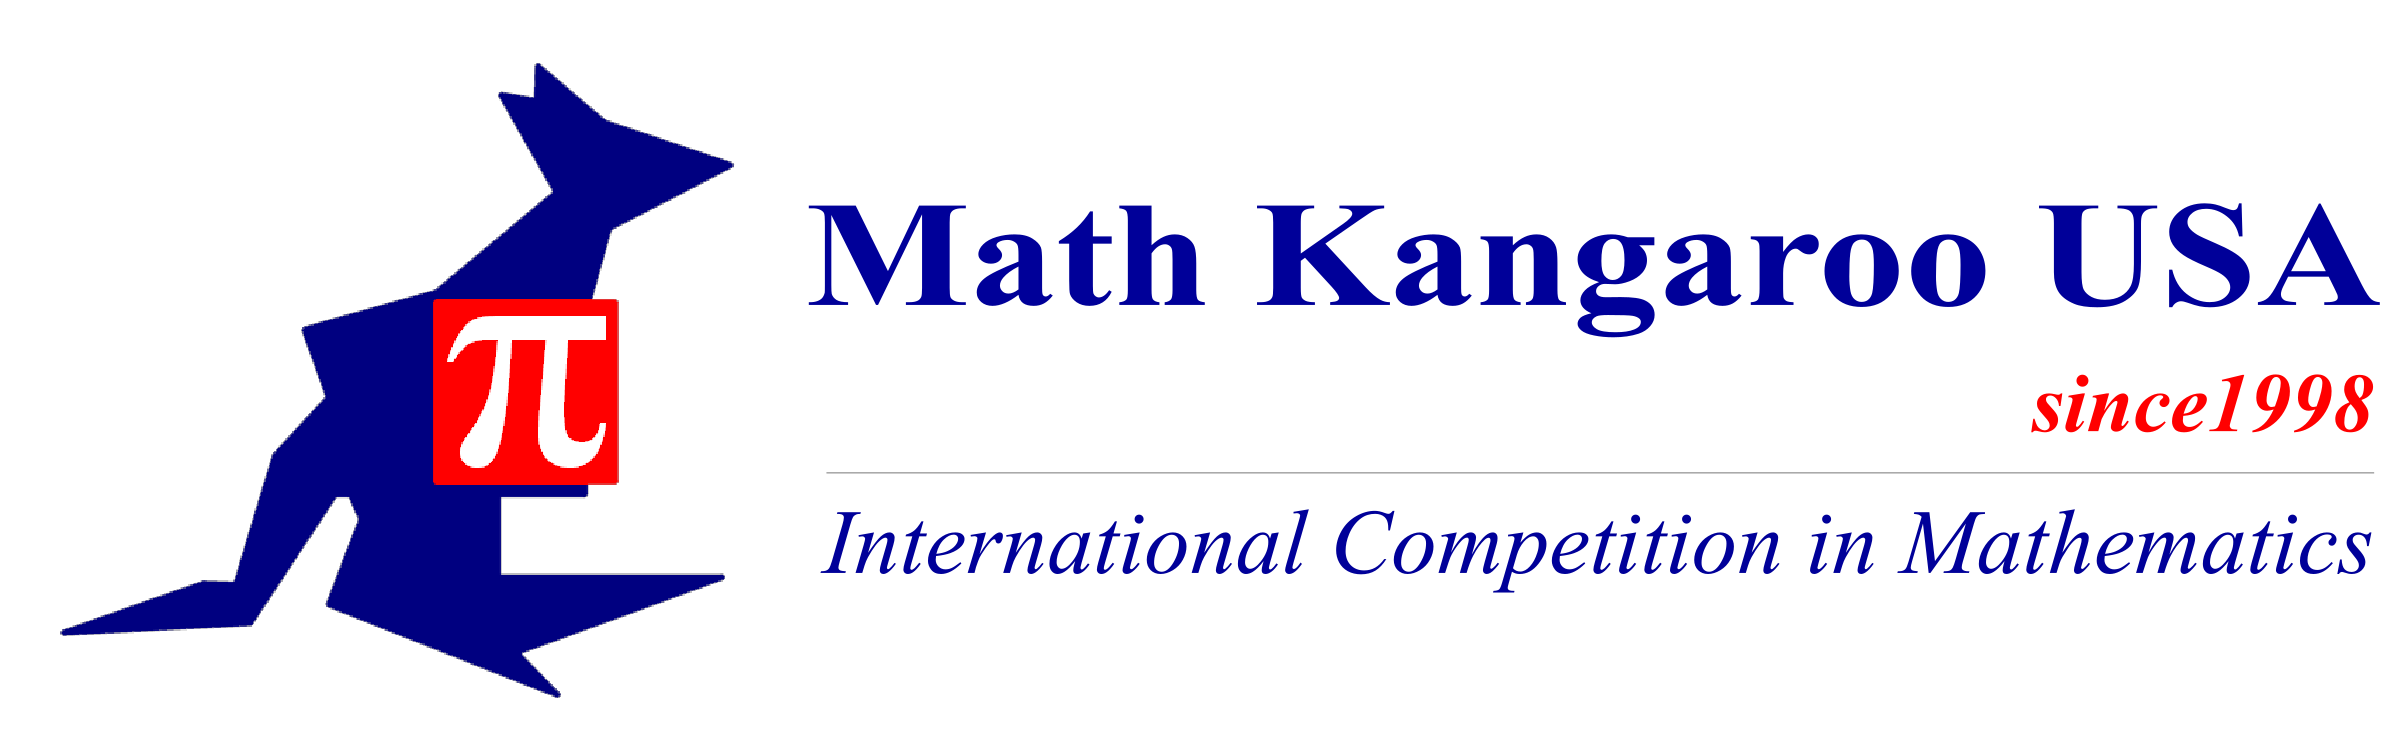 MathK logo